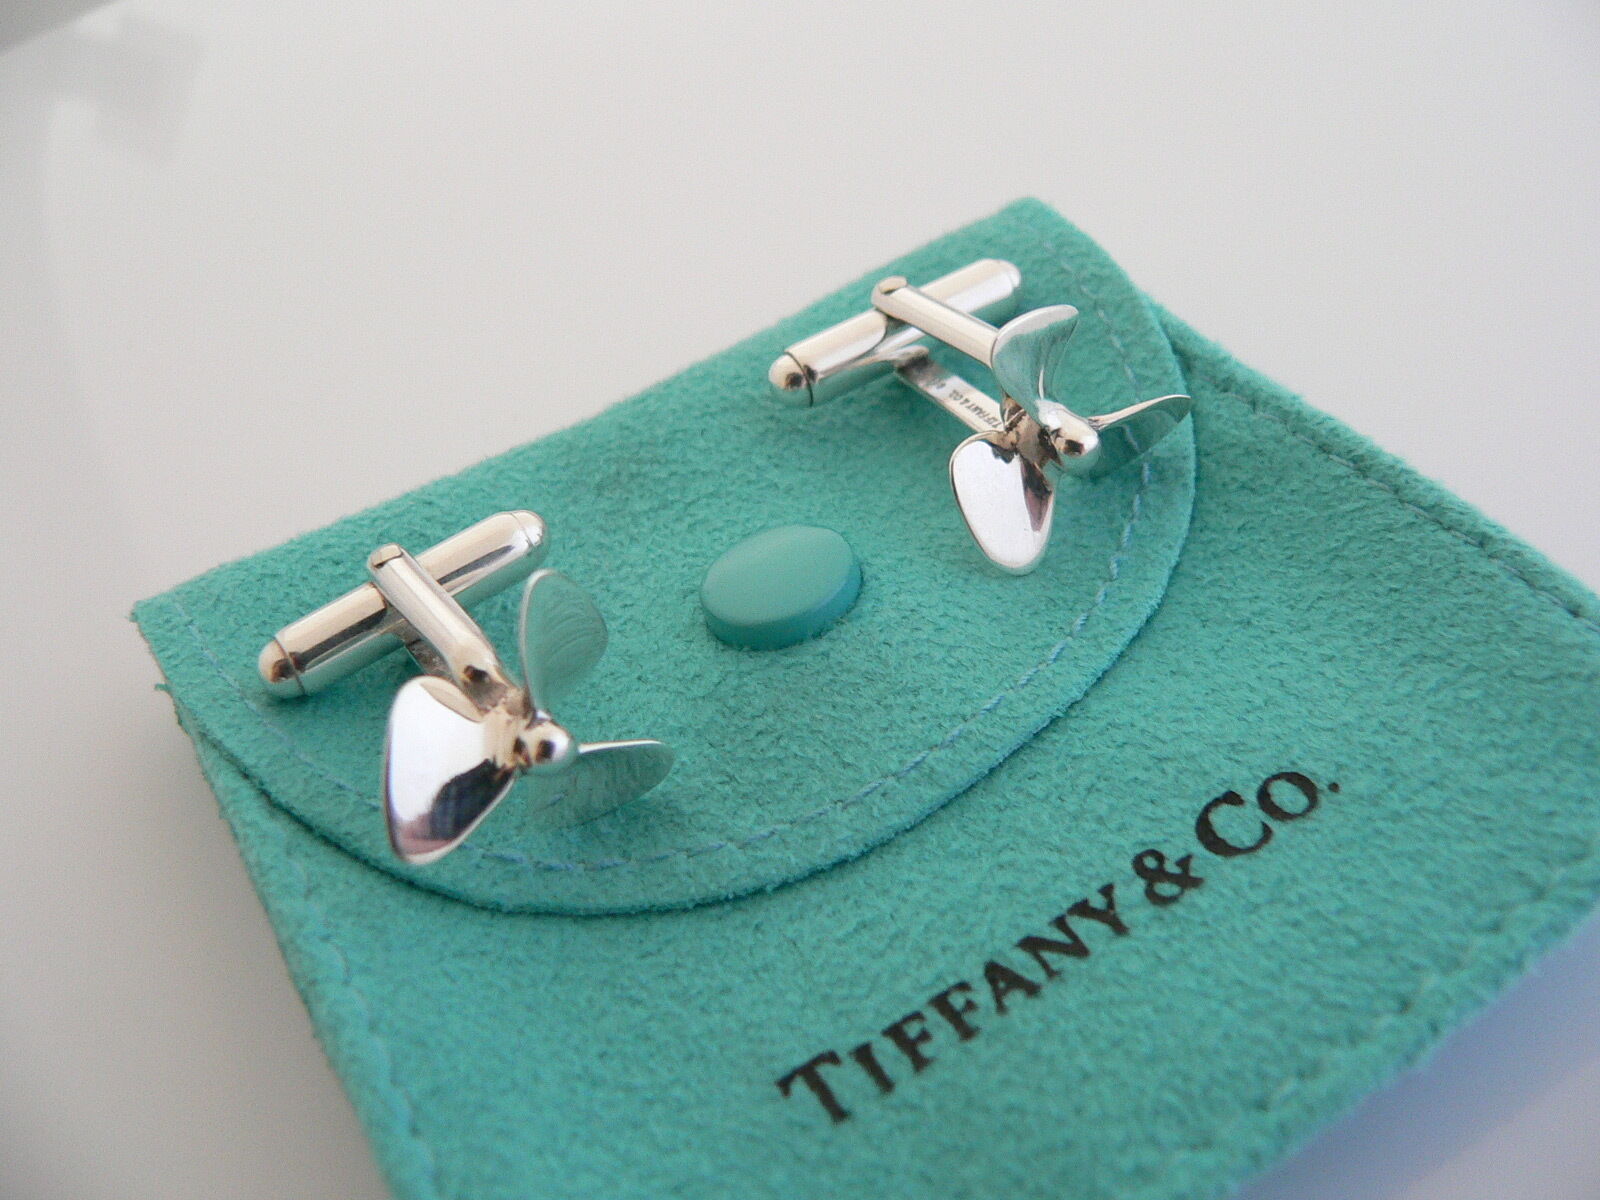 Tiffany & Co Propeller Cuff Link Boat Yacht Cufflink Gift Pouch Ocean Sea Lover